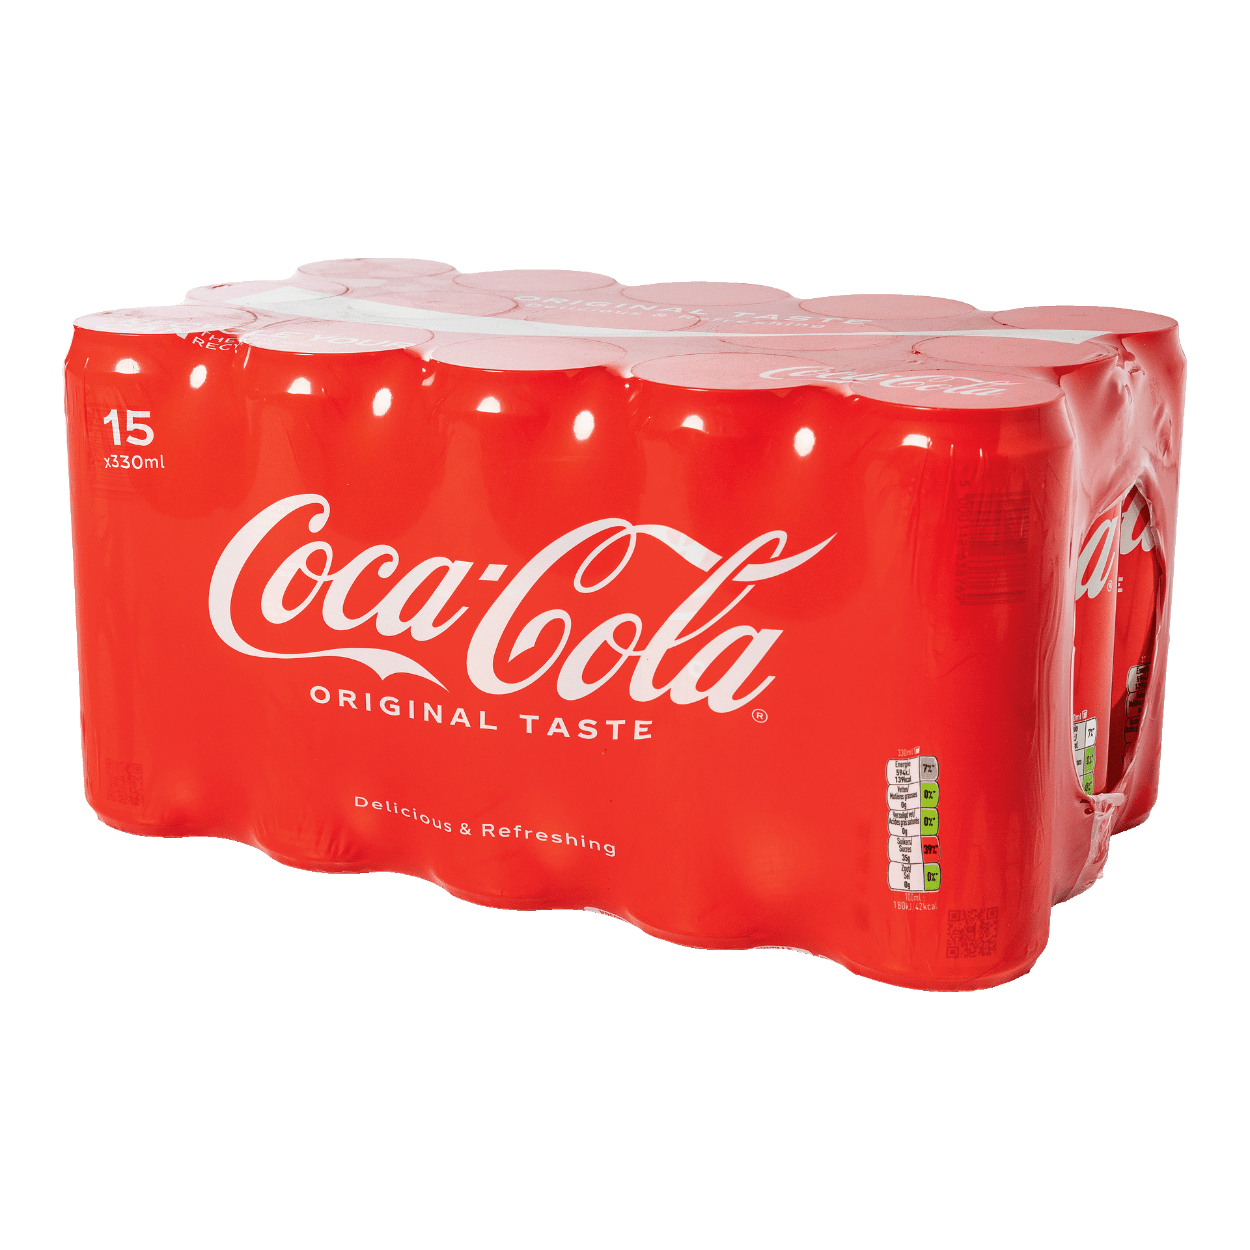 COCA-COLA® Coca-Cola regular, 15 kopen bij ALDI België